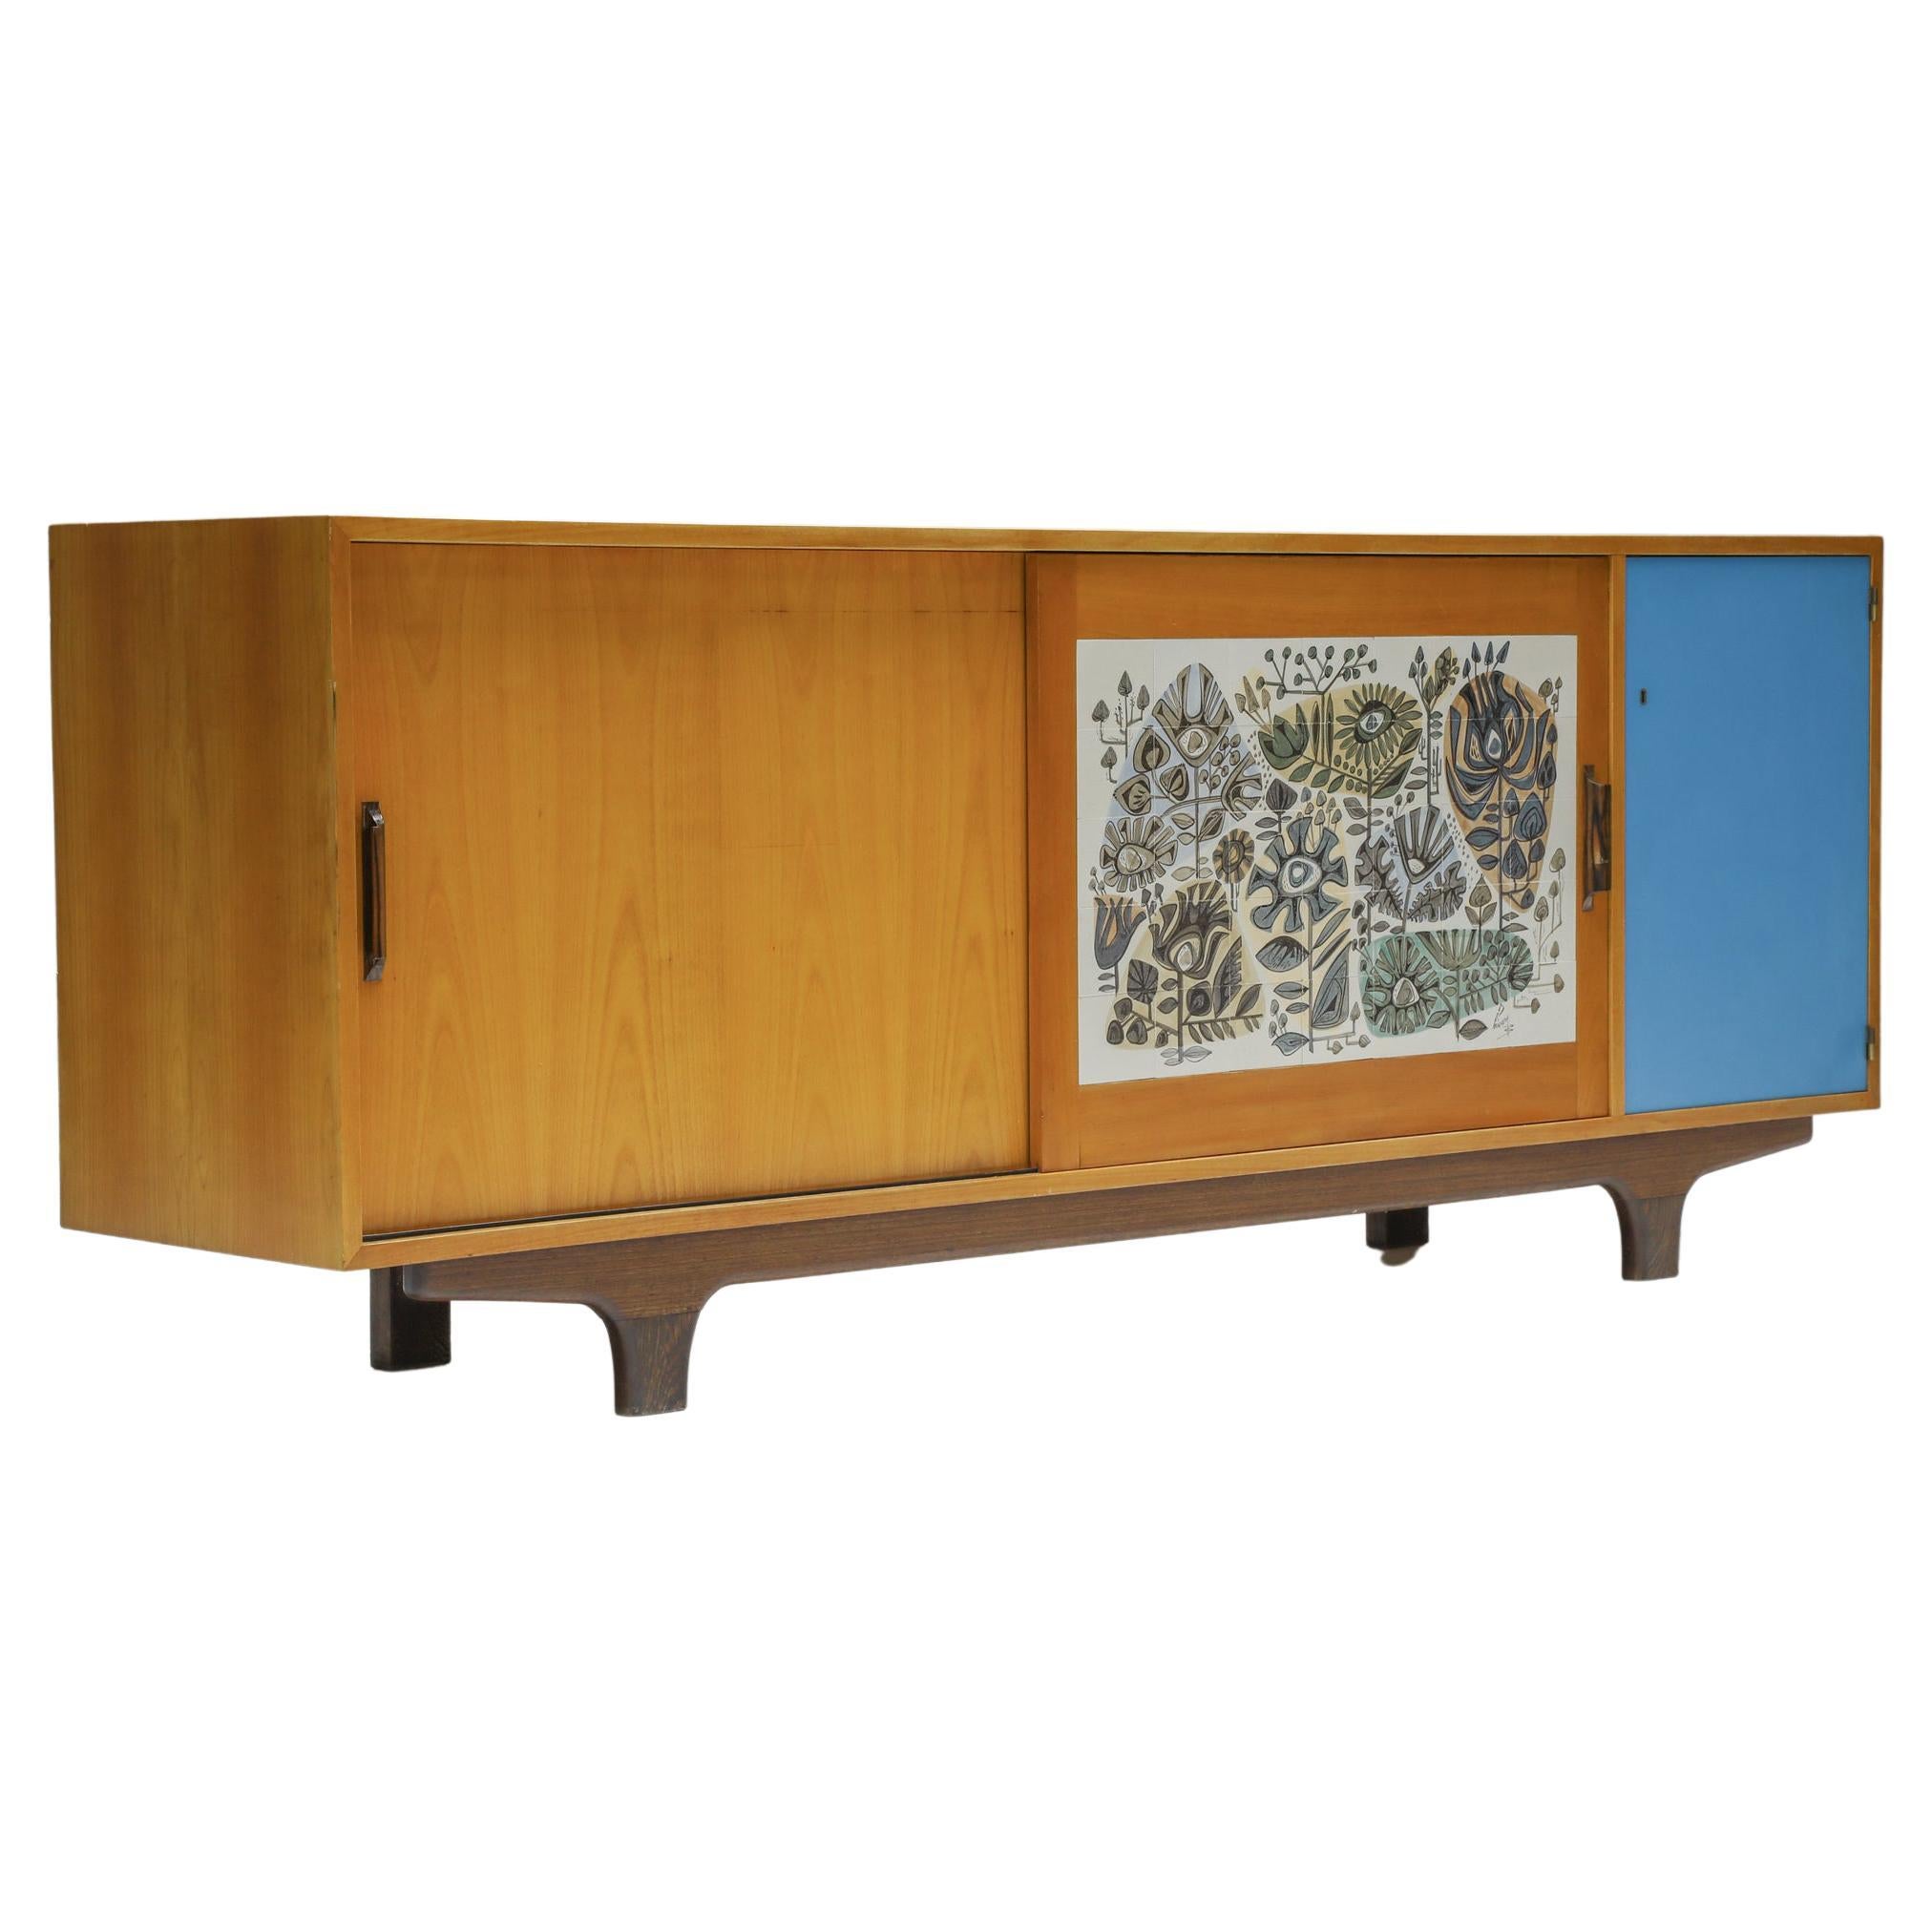 Modernist Sideboard with Perignem Ceramic and Macassar Details, 1950s